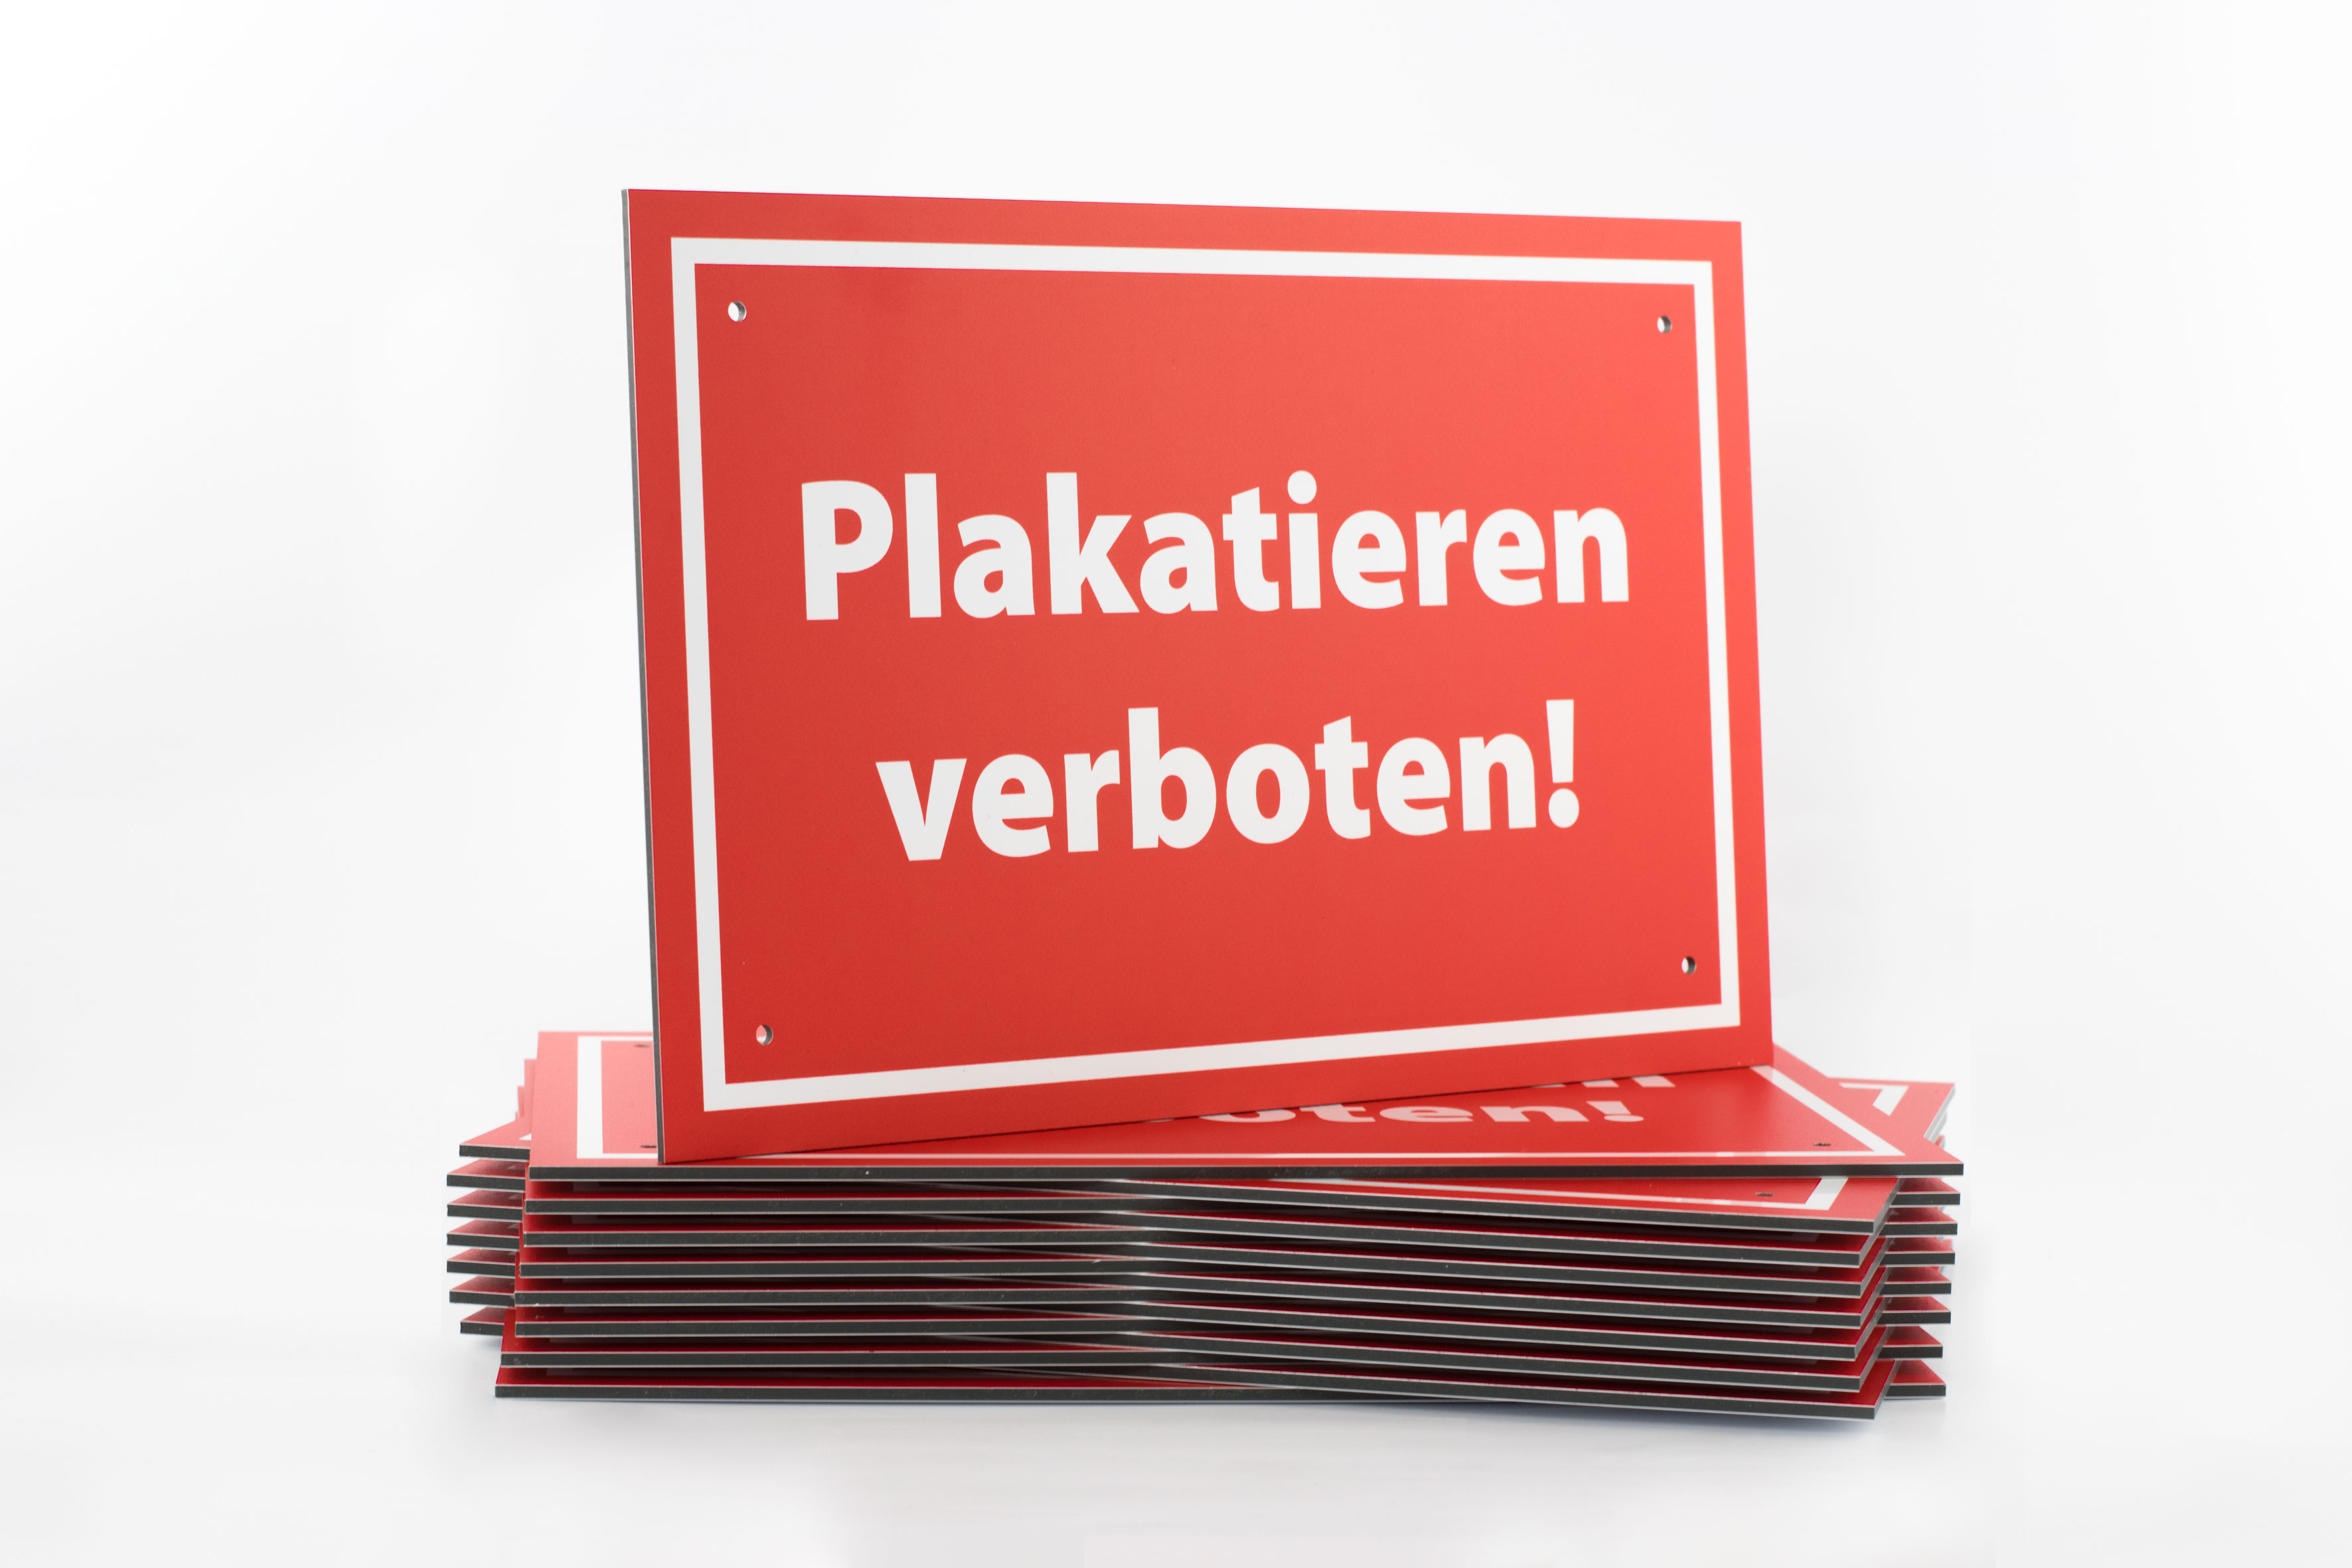 Plakatieren verboten! rot Warnschild Verbotsschild Plakate anbringen verboten